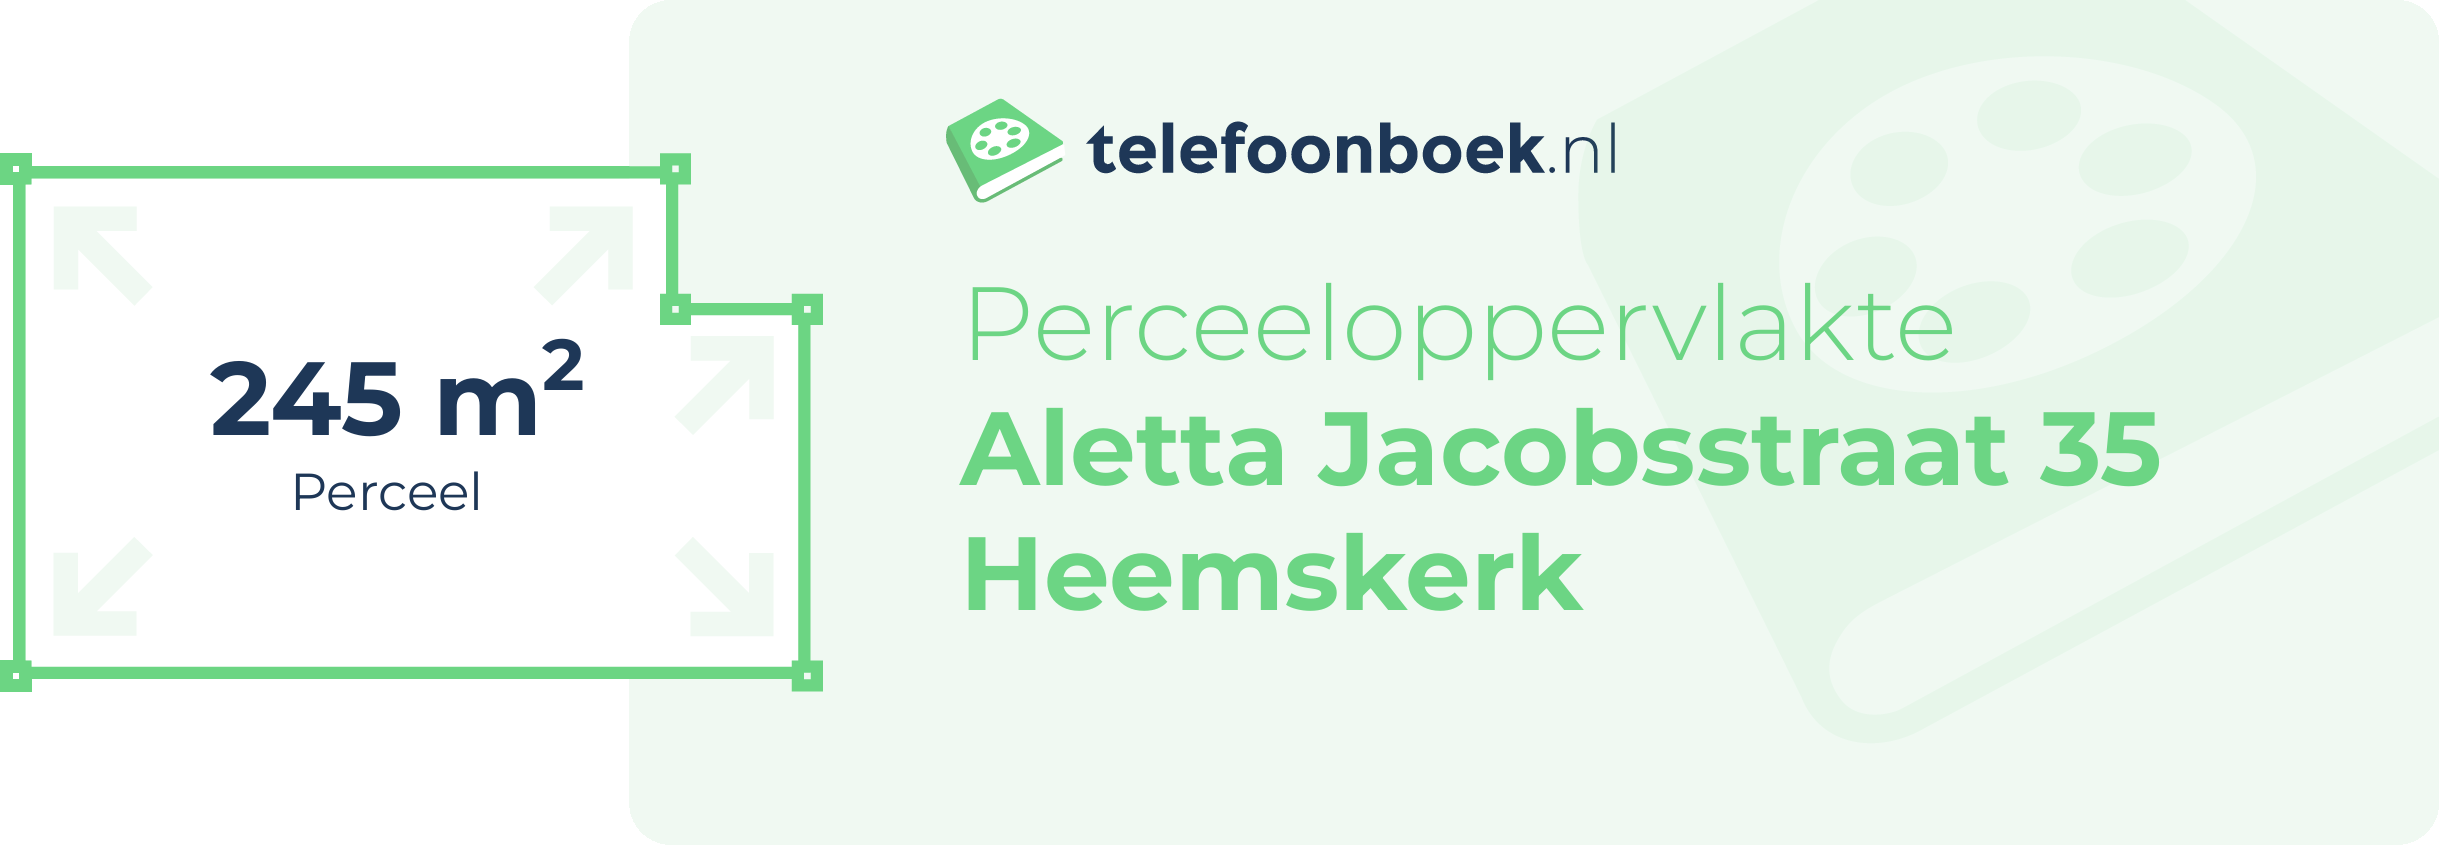 Perceeloppervlakte Aletta Jacobsstraat 35 Heemskerk